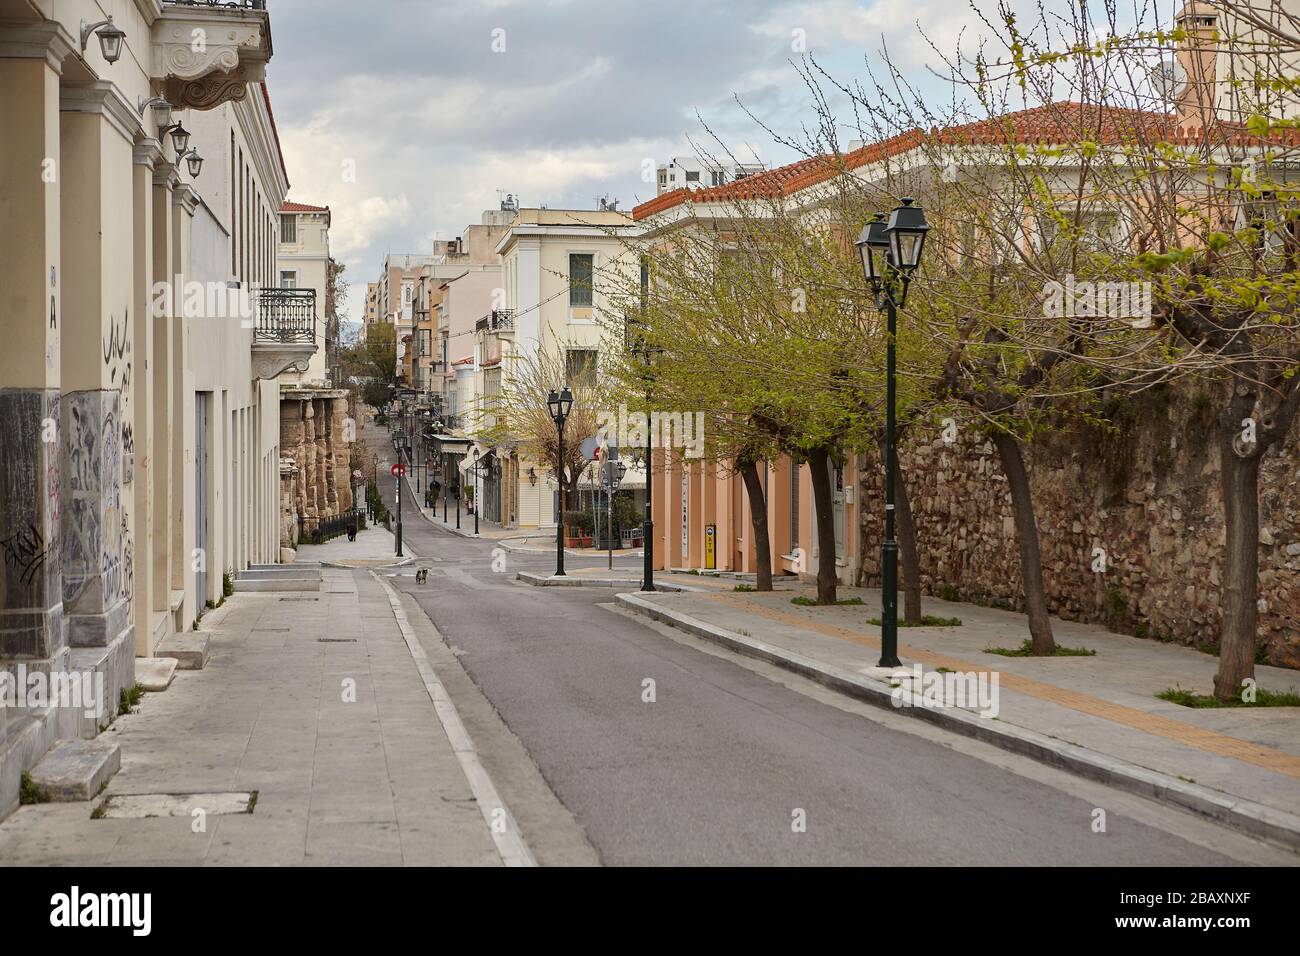 empty street and closed shop at plaka Athens Greece, coronavirus Stock Photo